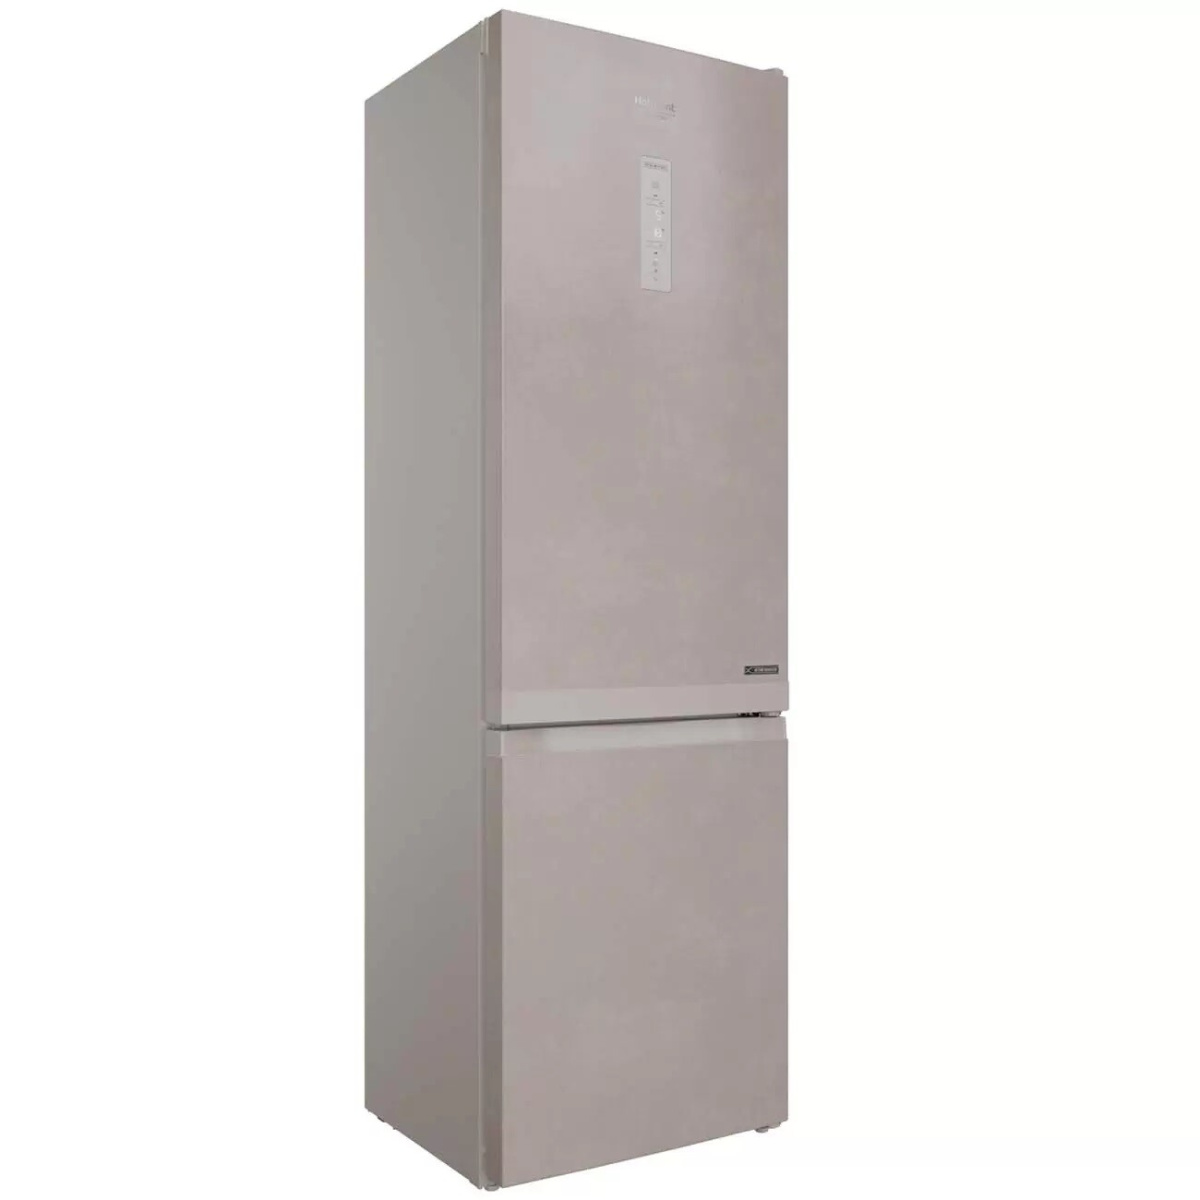 Холодильник hotpoint ariston 4200